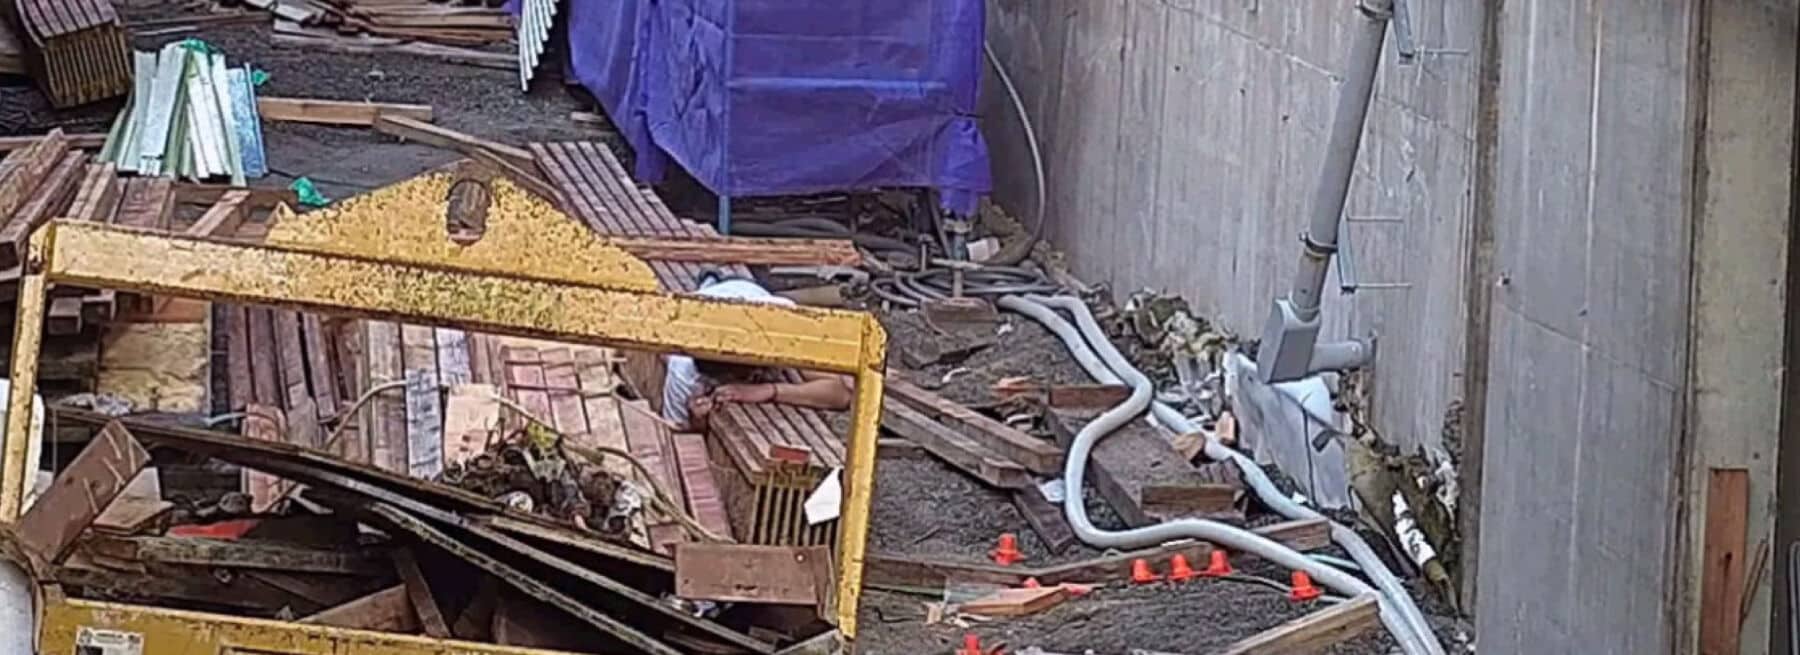 Man caught sleeping on materials at Washington construction site